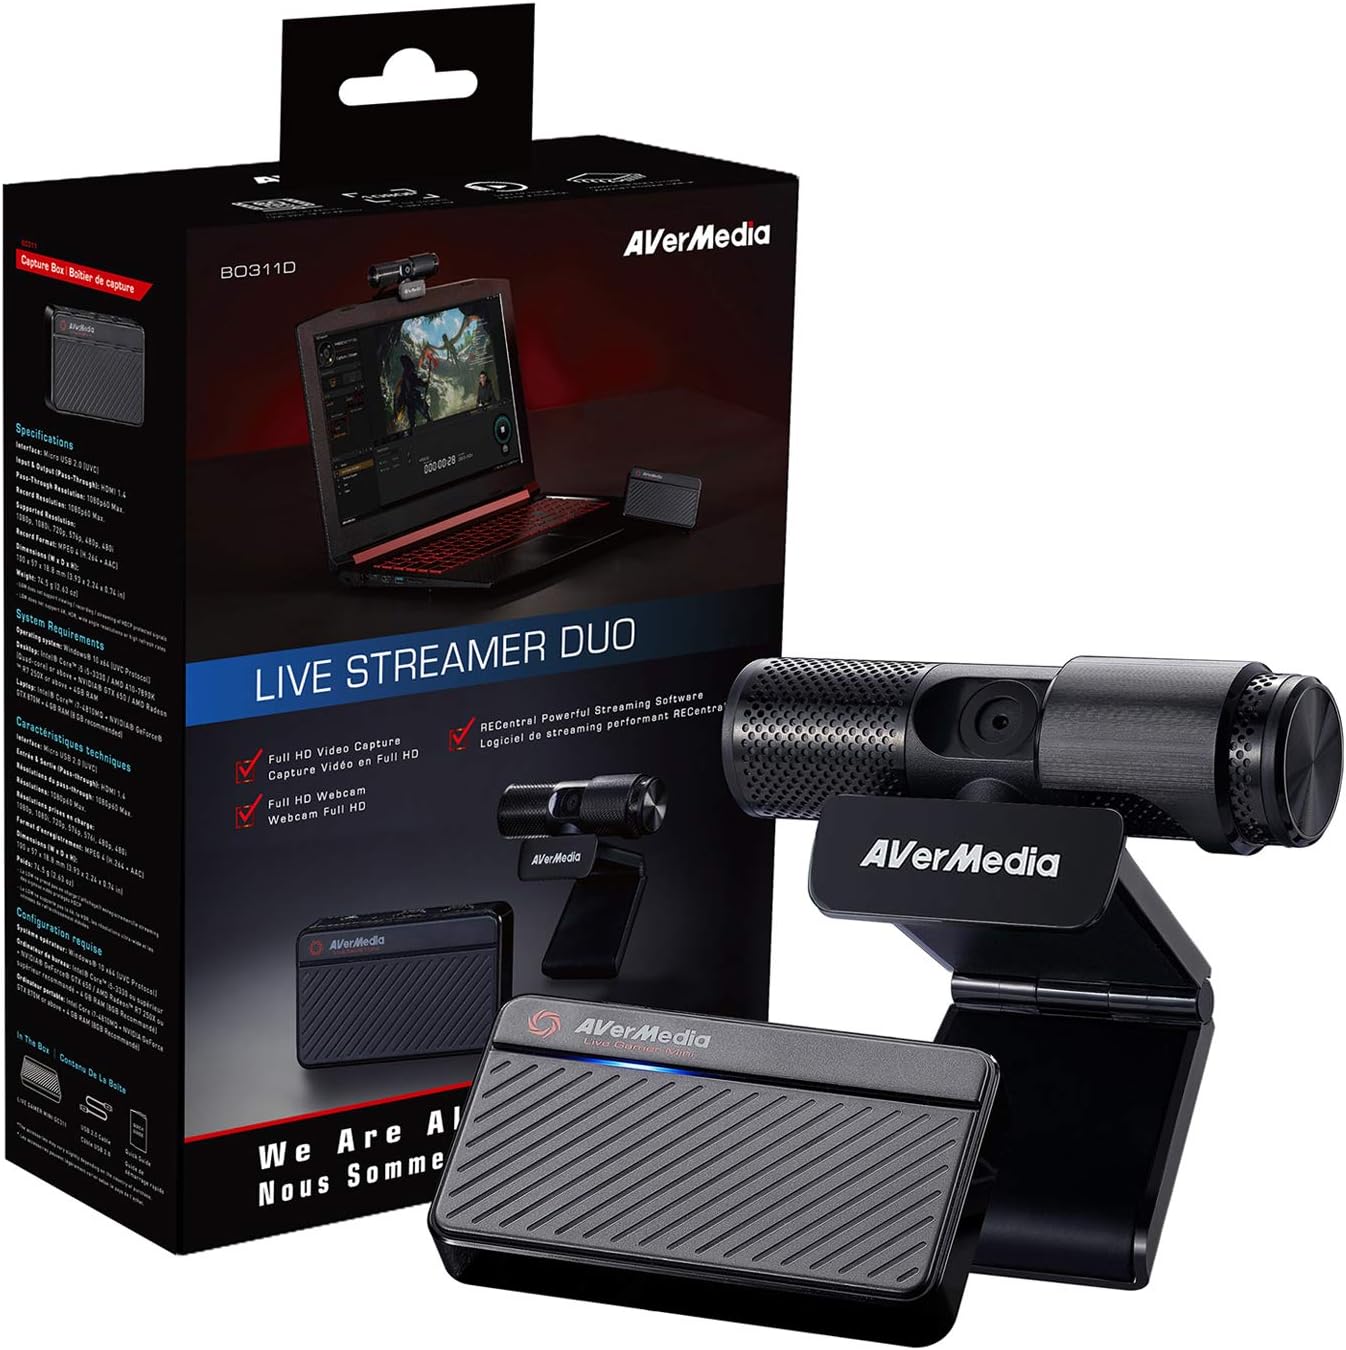 AverMedia Live Streamer Device B0311D Combo Set (GC311 External Capture Card | CAM 311 Webcam)